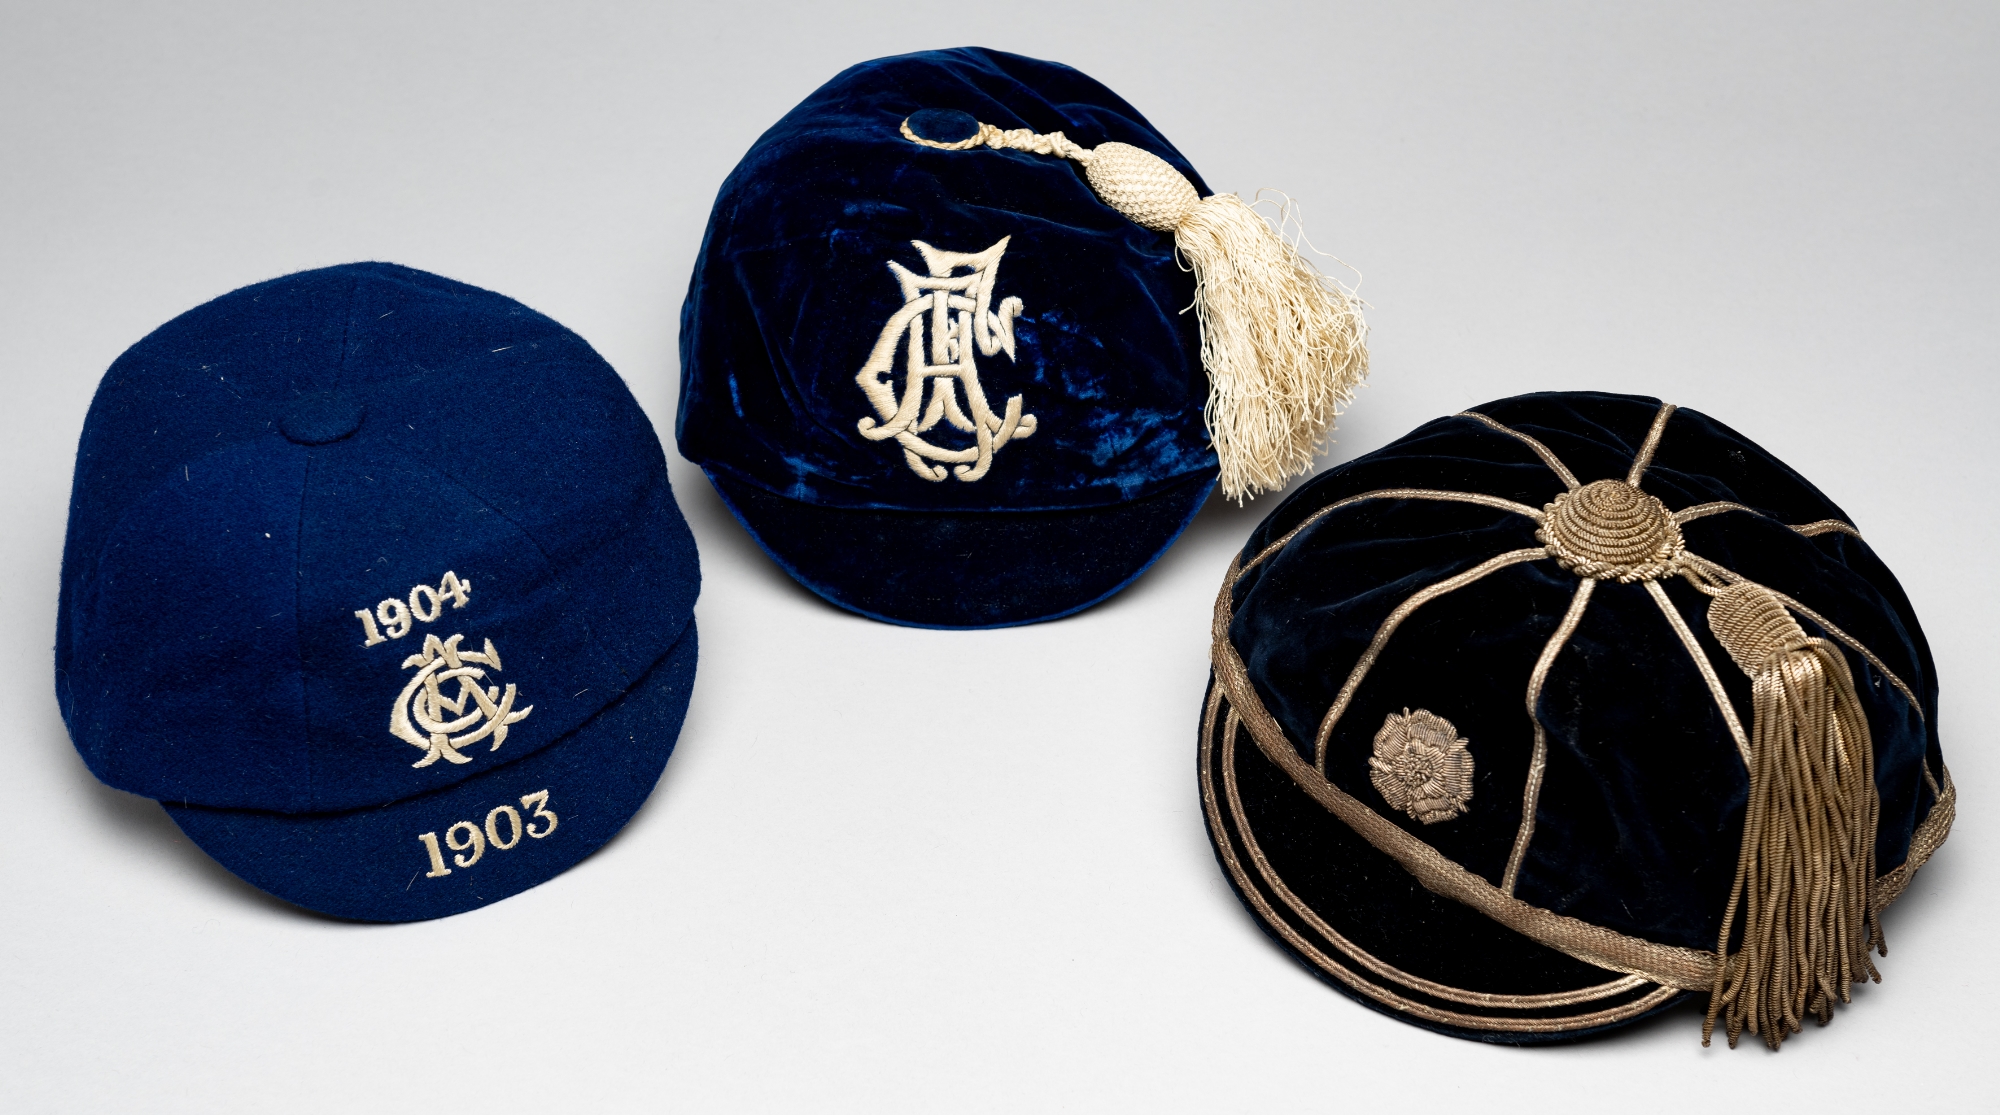 Three representative caps awarded to A Burn Murdoch, circa 1900s, comprising navy velvet cap with